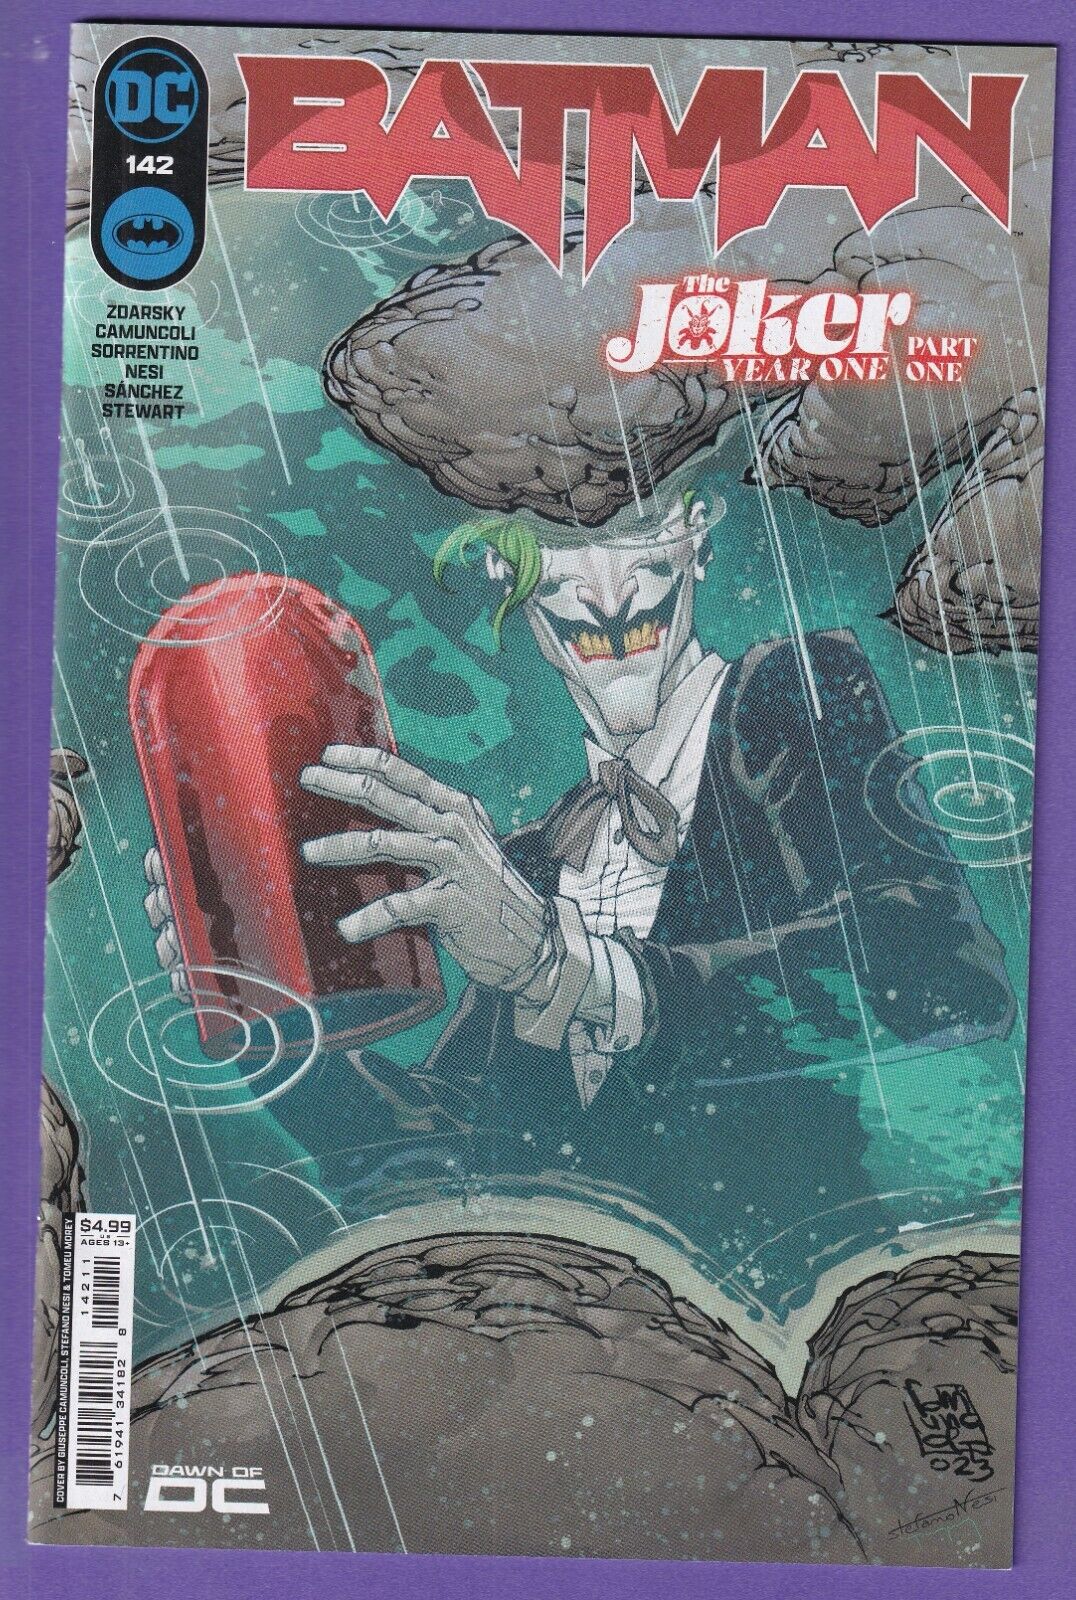 Batman #142 Joker Year One 1st Print Main Cover Variant Actual Scans